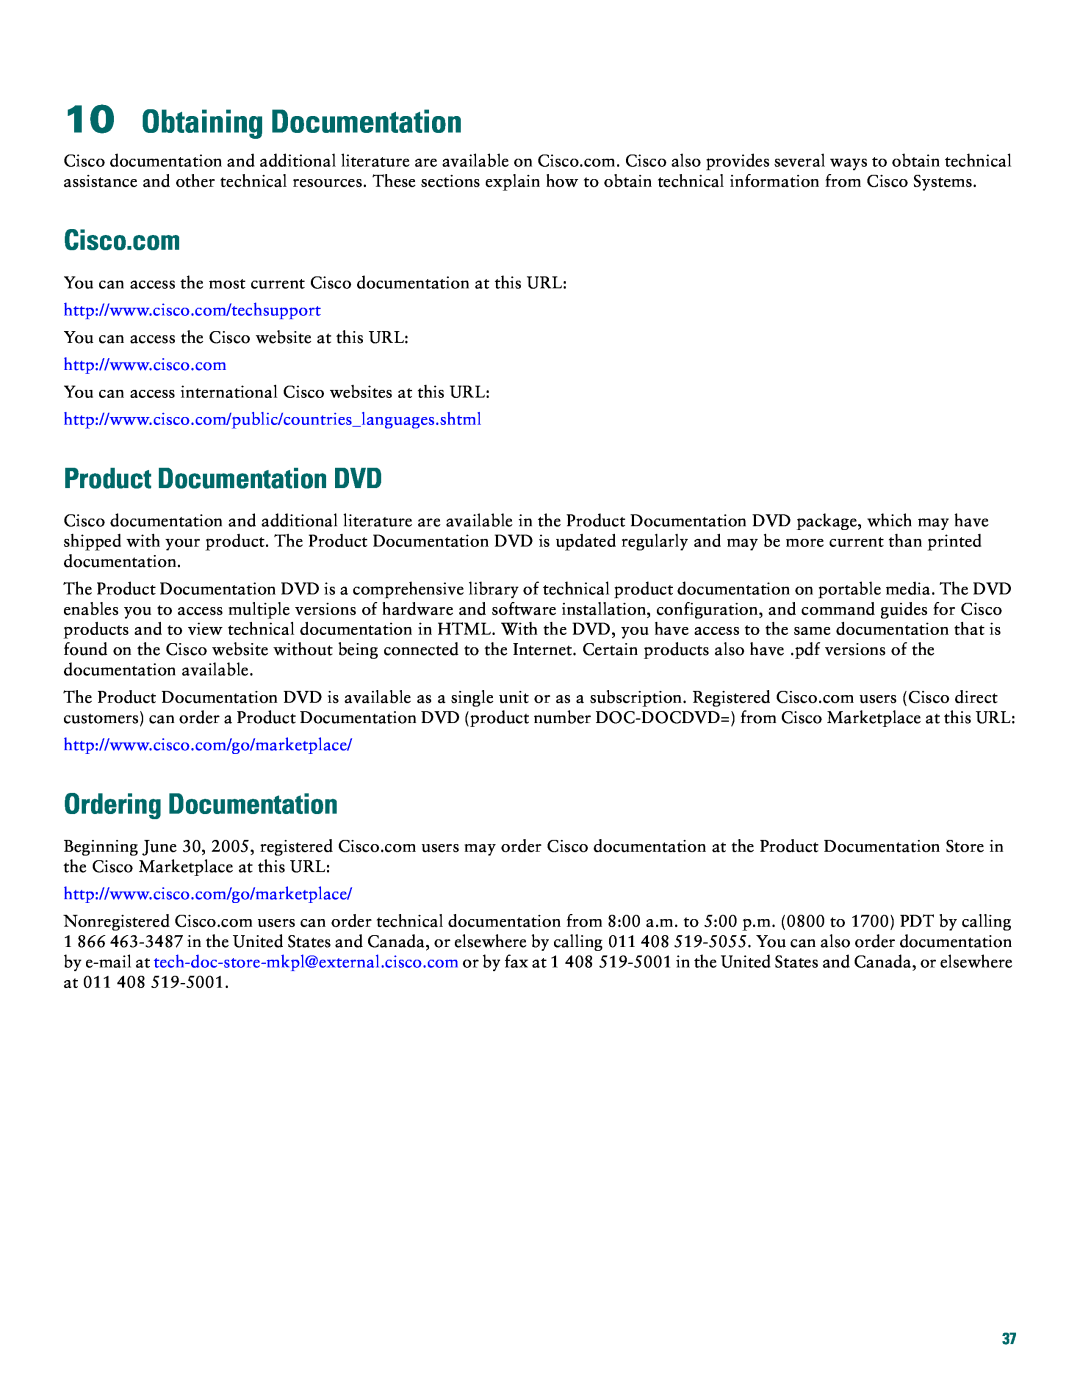 Cisco Systems 2800 manual Obtaining Documentation, Cisco.com, Product Documentation DVD, Ordering Documentation 